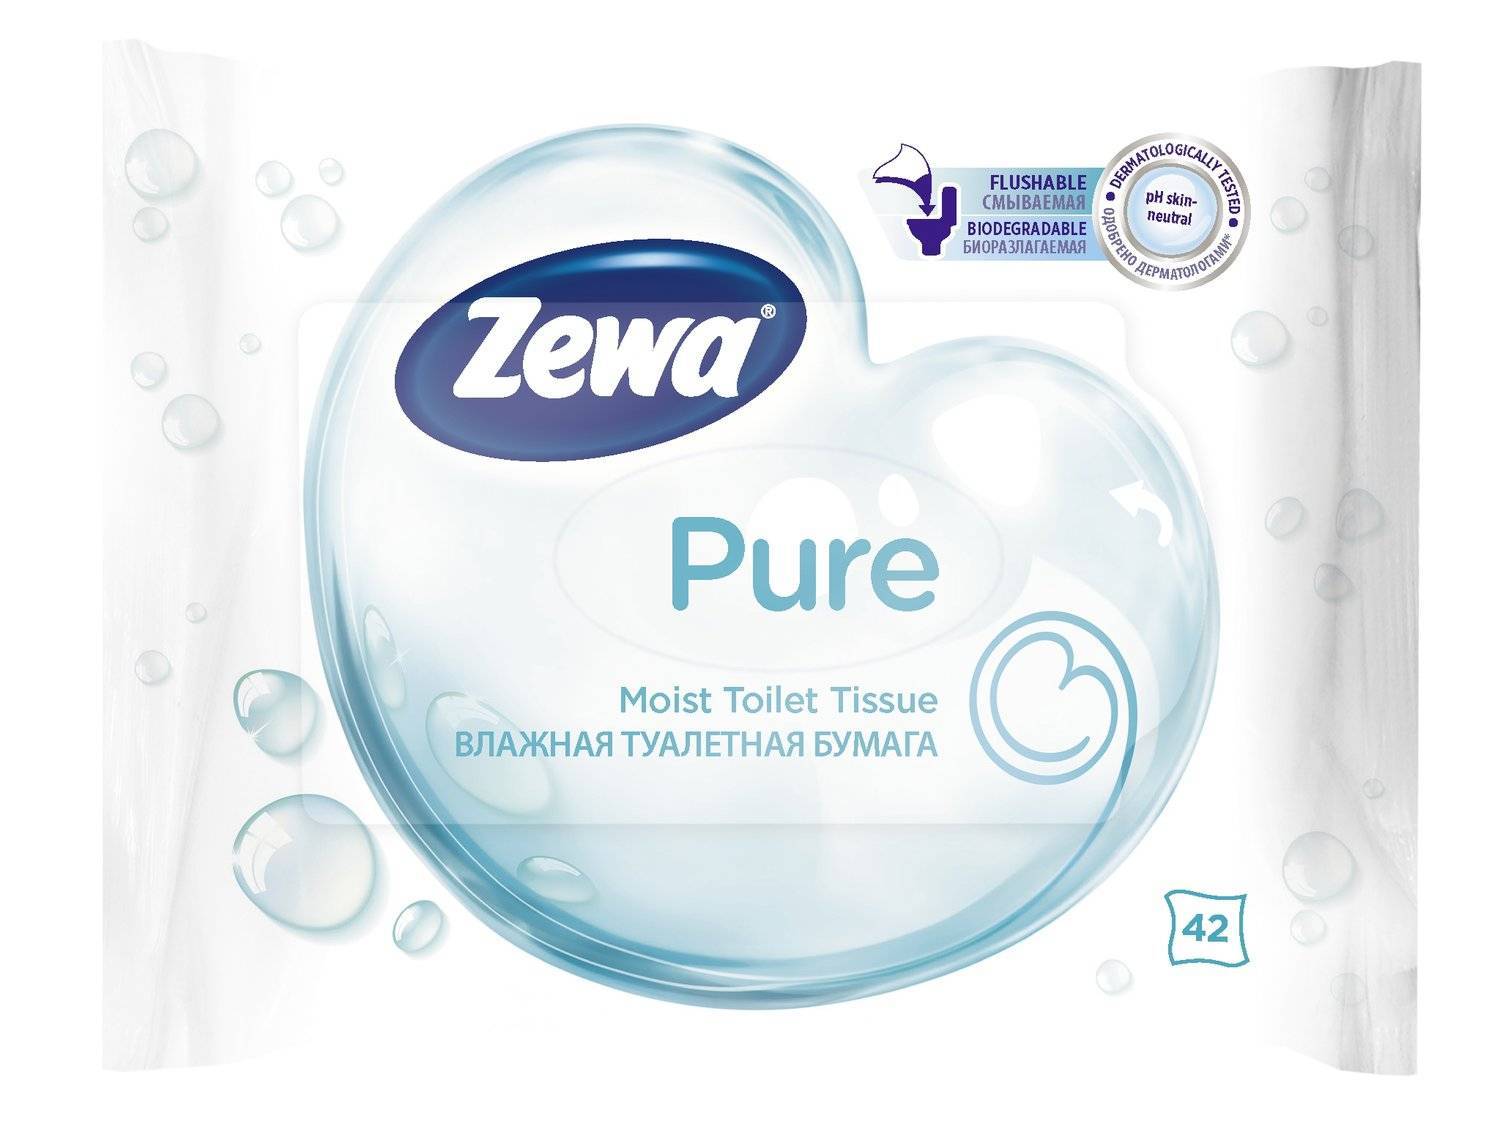 Бумага влажность. Влажная бумага Zewa Pure. Zewa Pure 42 штуки. Влажная туалетная бумага Zewa. Zewa Pure влажная туалетная бумага.